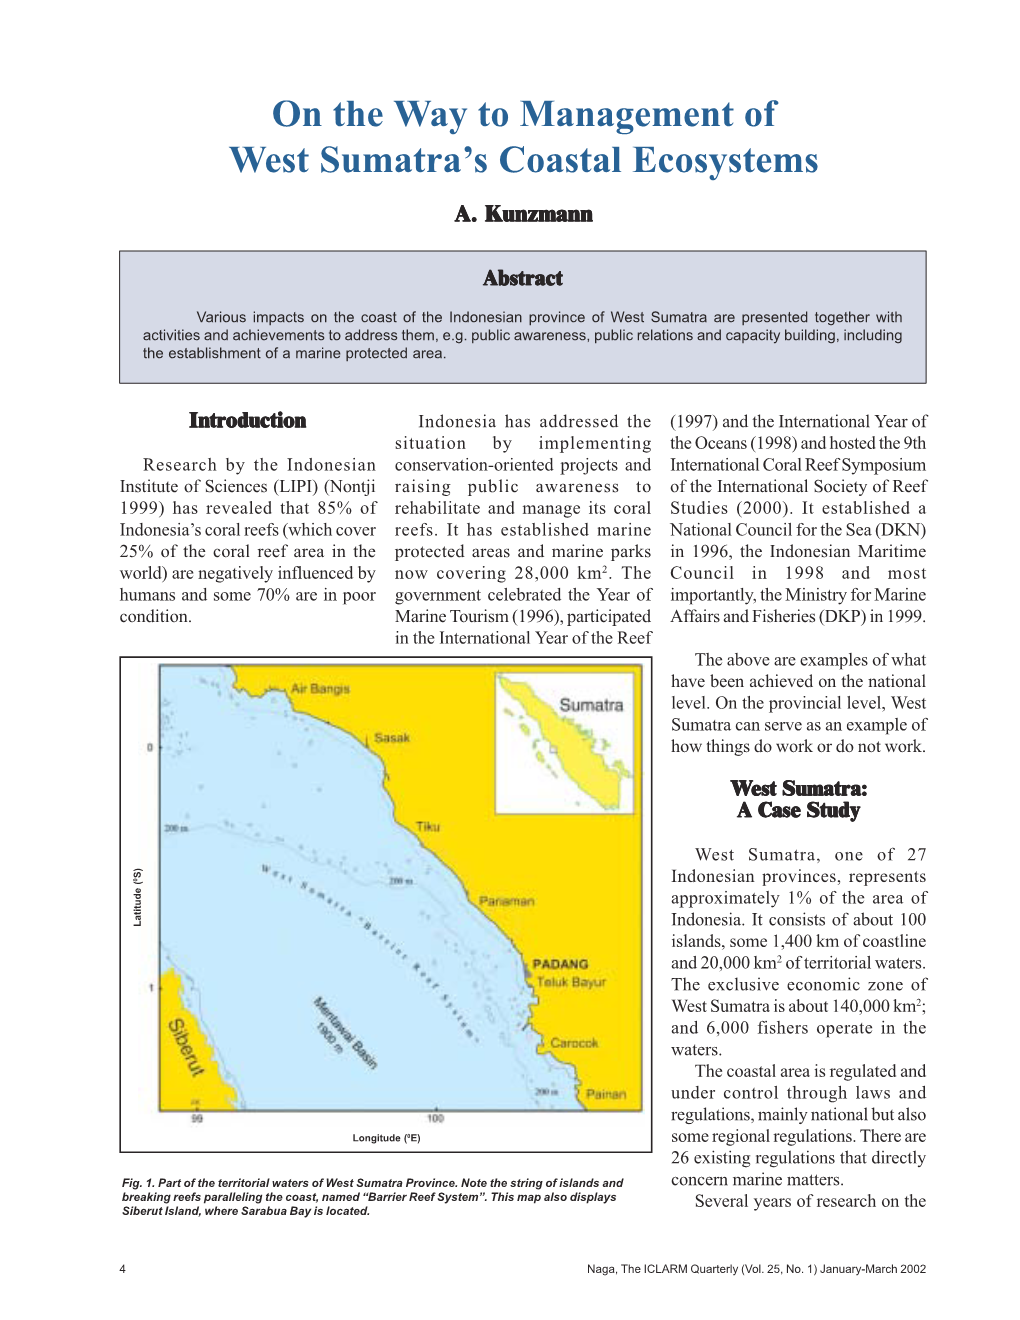 On the Way to Management of West Sumatra's Coastal Ecosystems